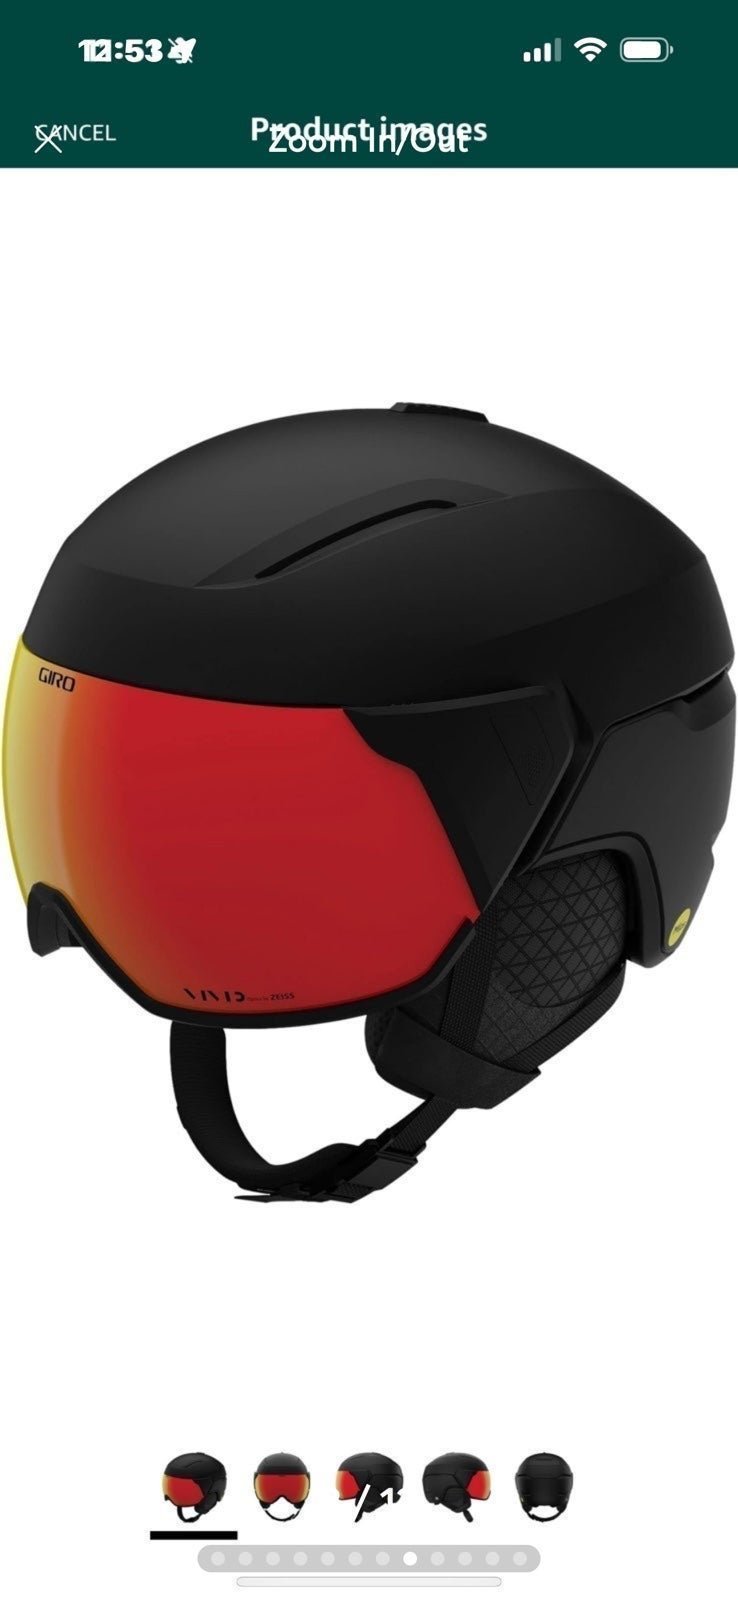 NWT! Giro Orbit Spherical MIPS Snow Helmet w/ VIVID Lens Face Shield - SMALL iW2FfDrXB